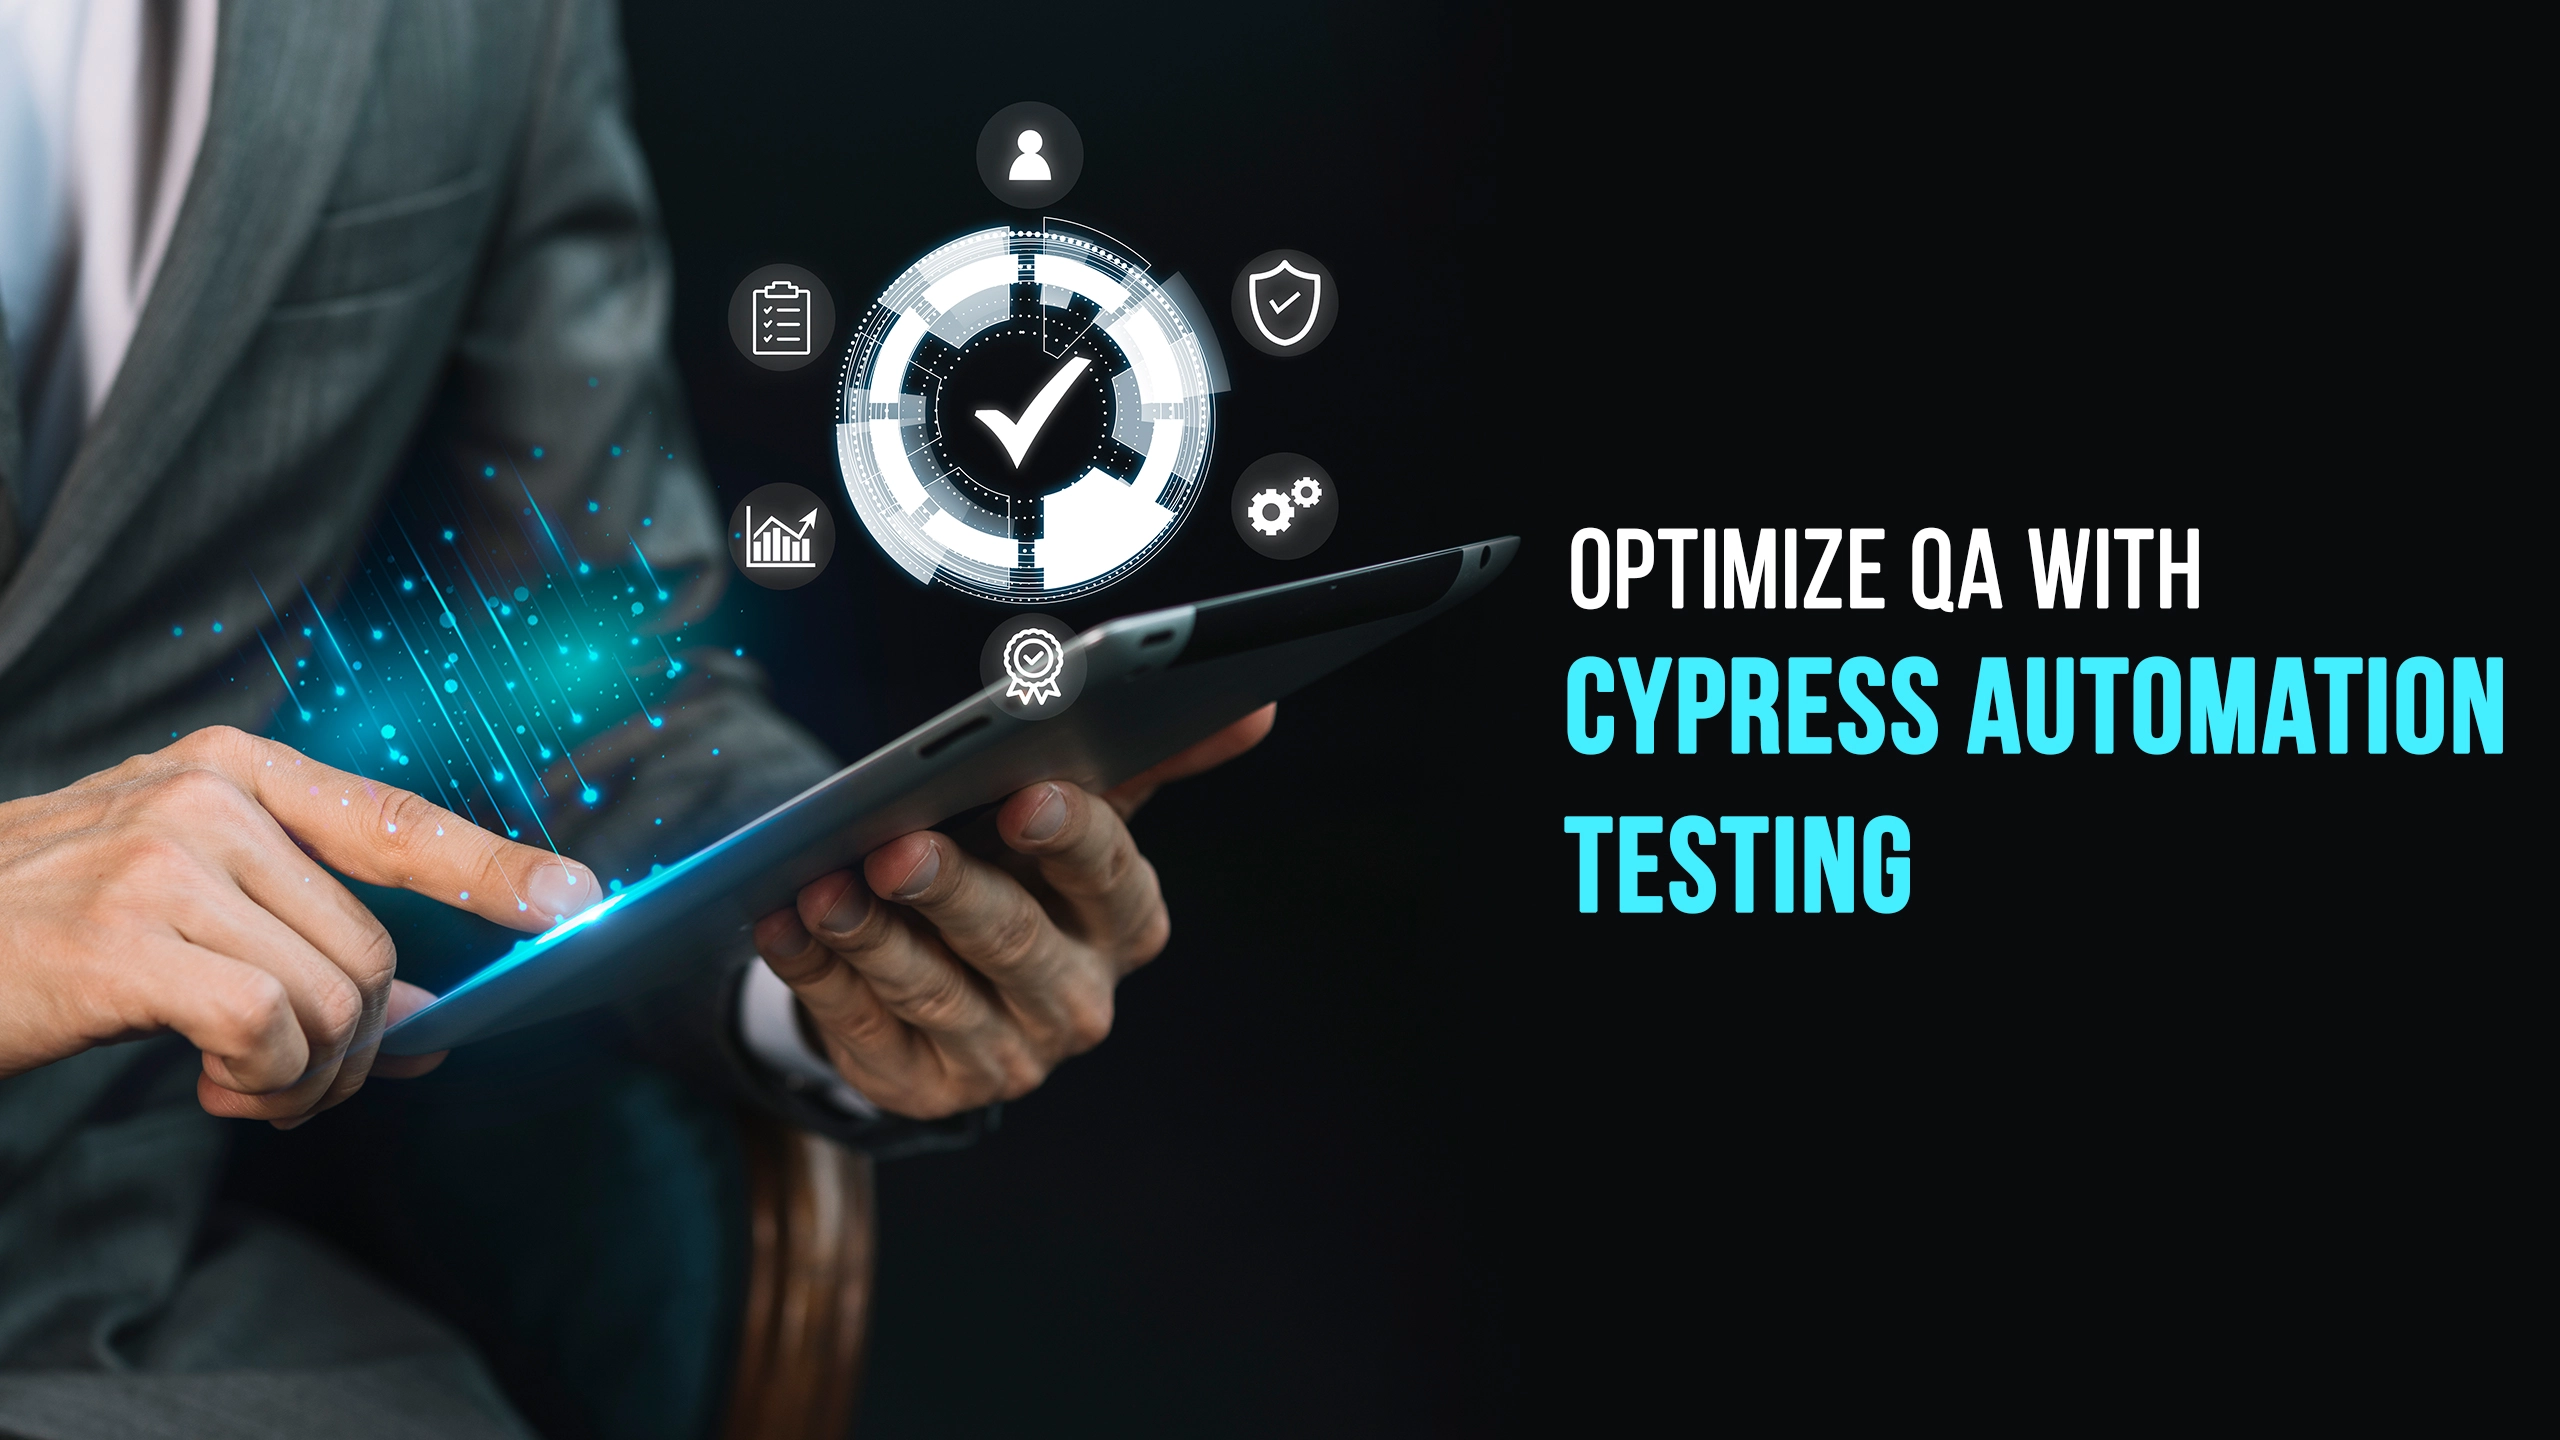 Cypress Automation Testing